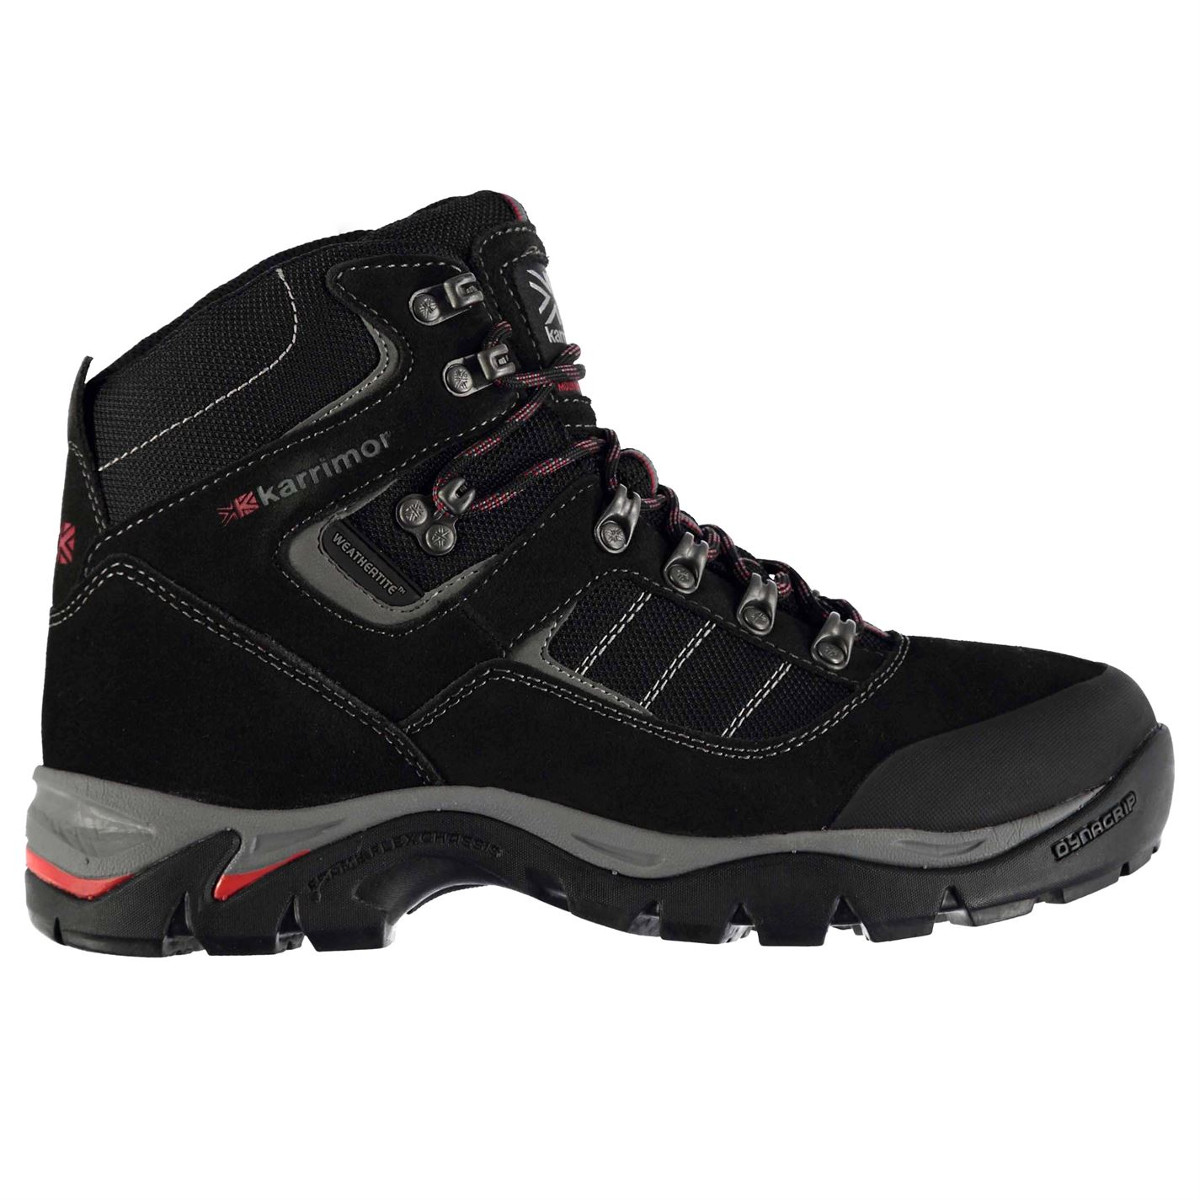 Karrimor Men's Ksb 200 Waterproof Mid Hiking Boots - Black, 14